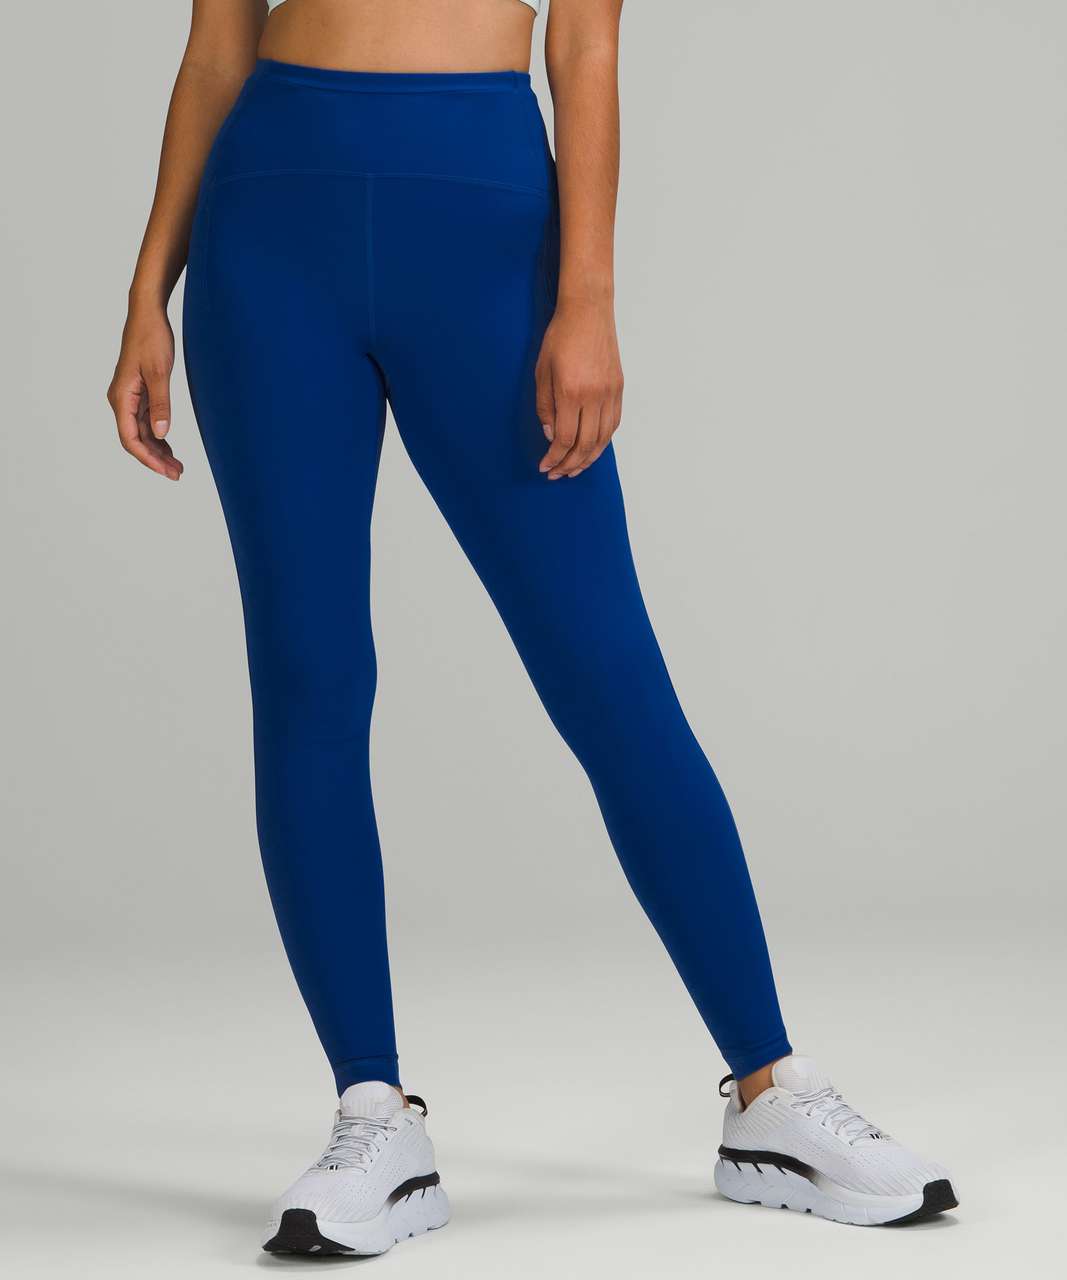 Buy the Lululemon Women's Athletica Blue & Black Pattern Crinkle Knee High  Leggings Size 4